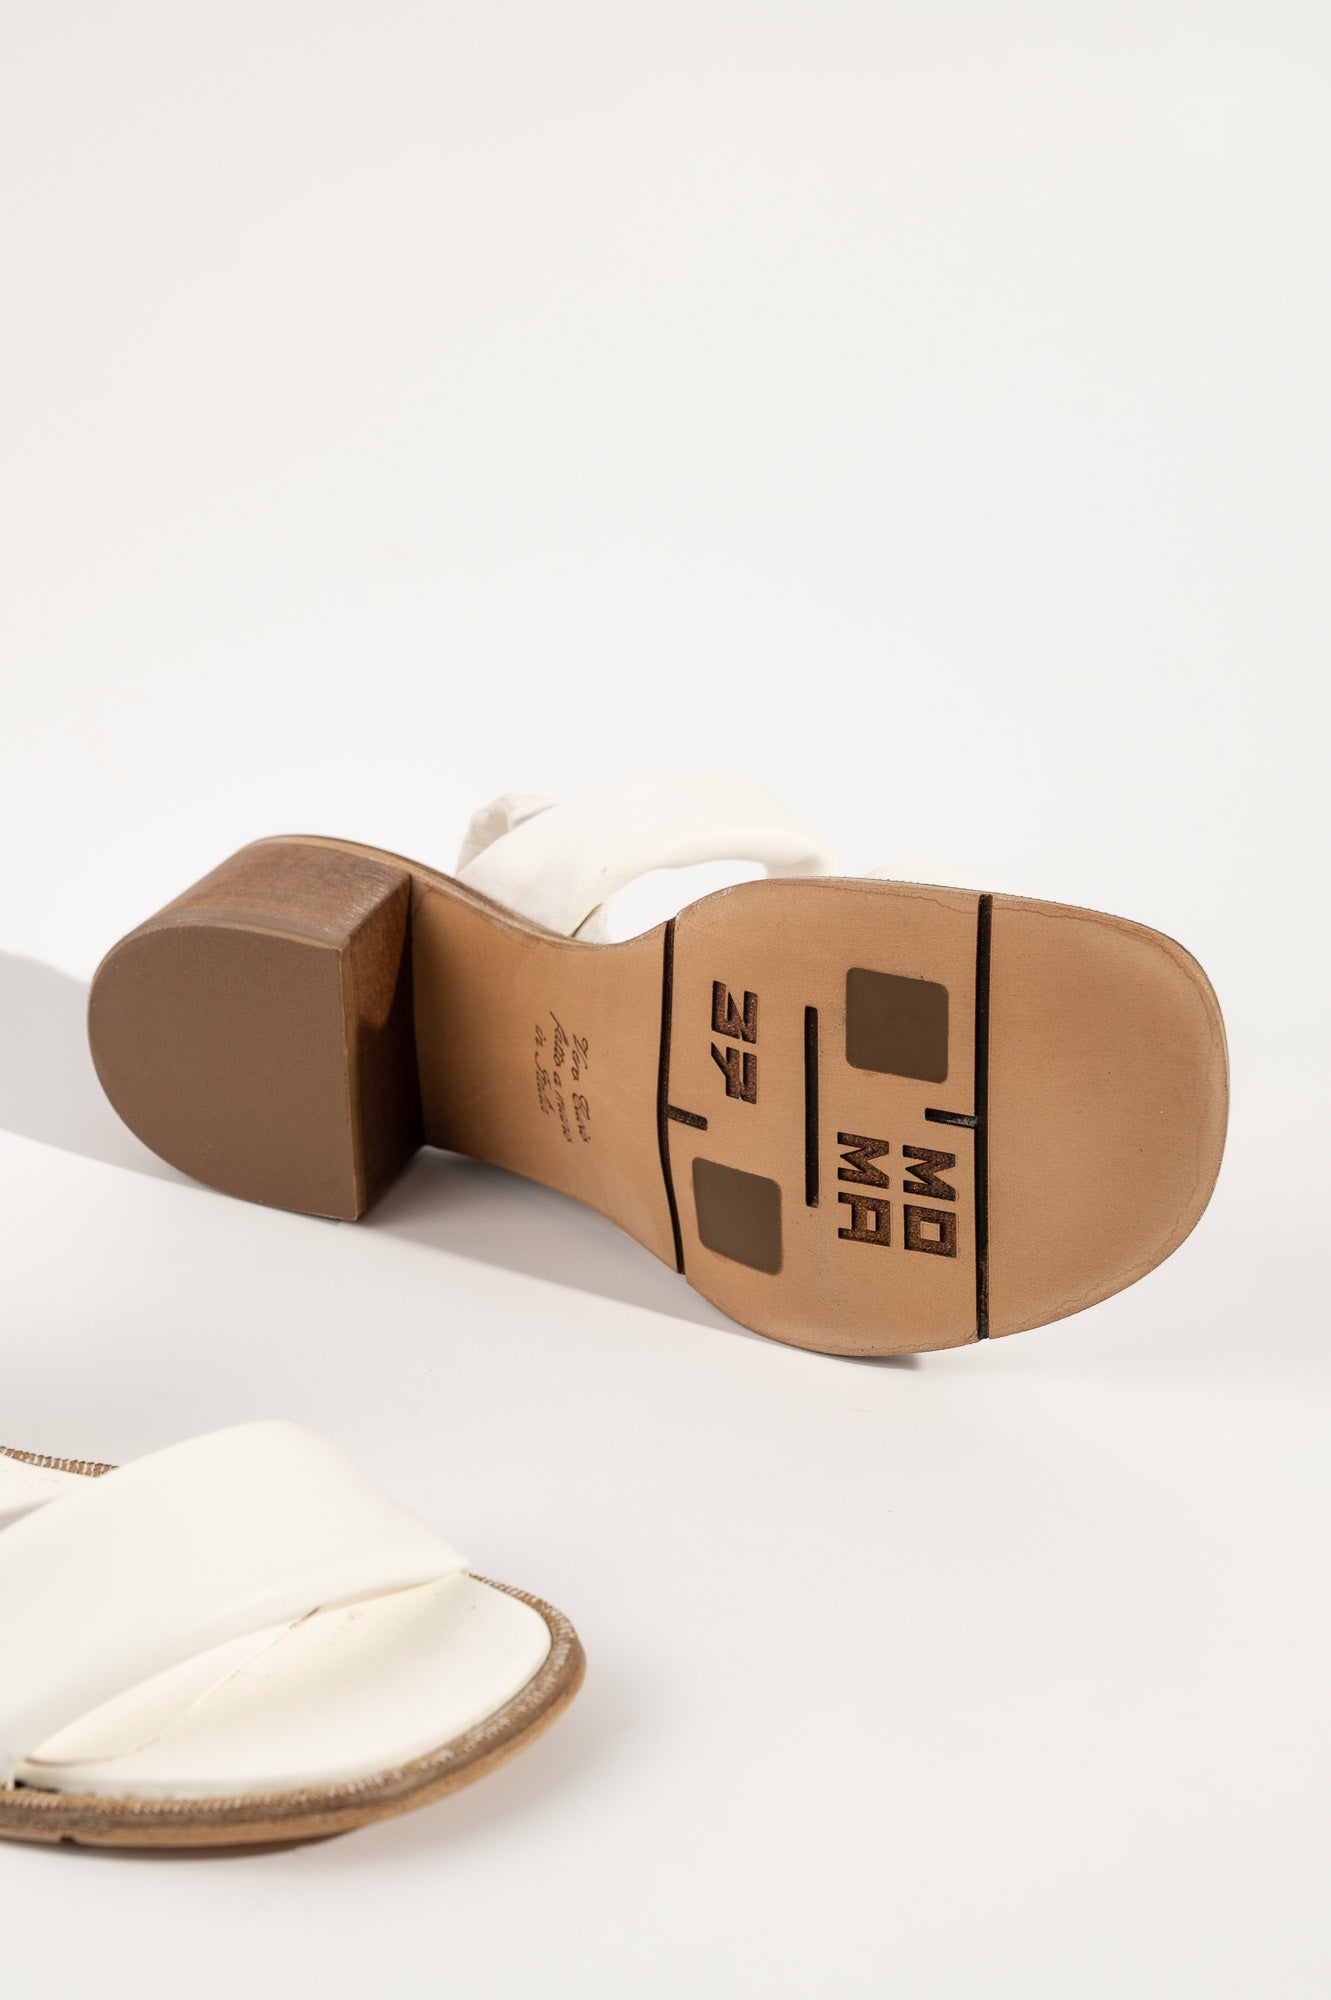 Sandal 124 | White Leather